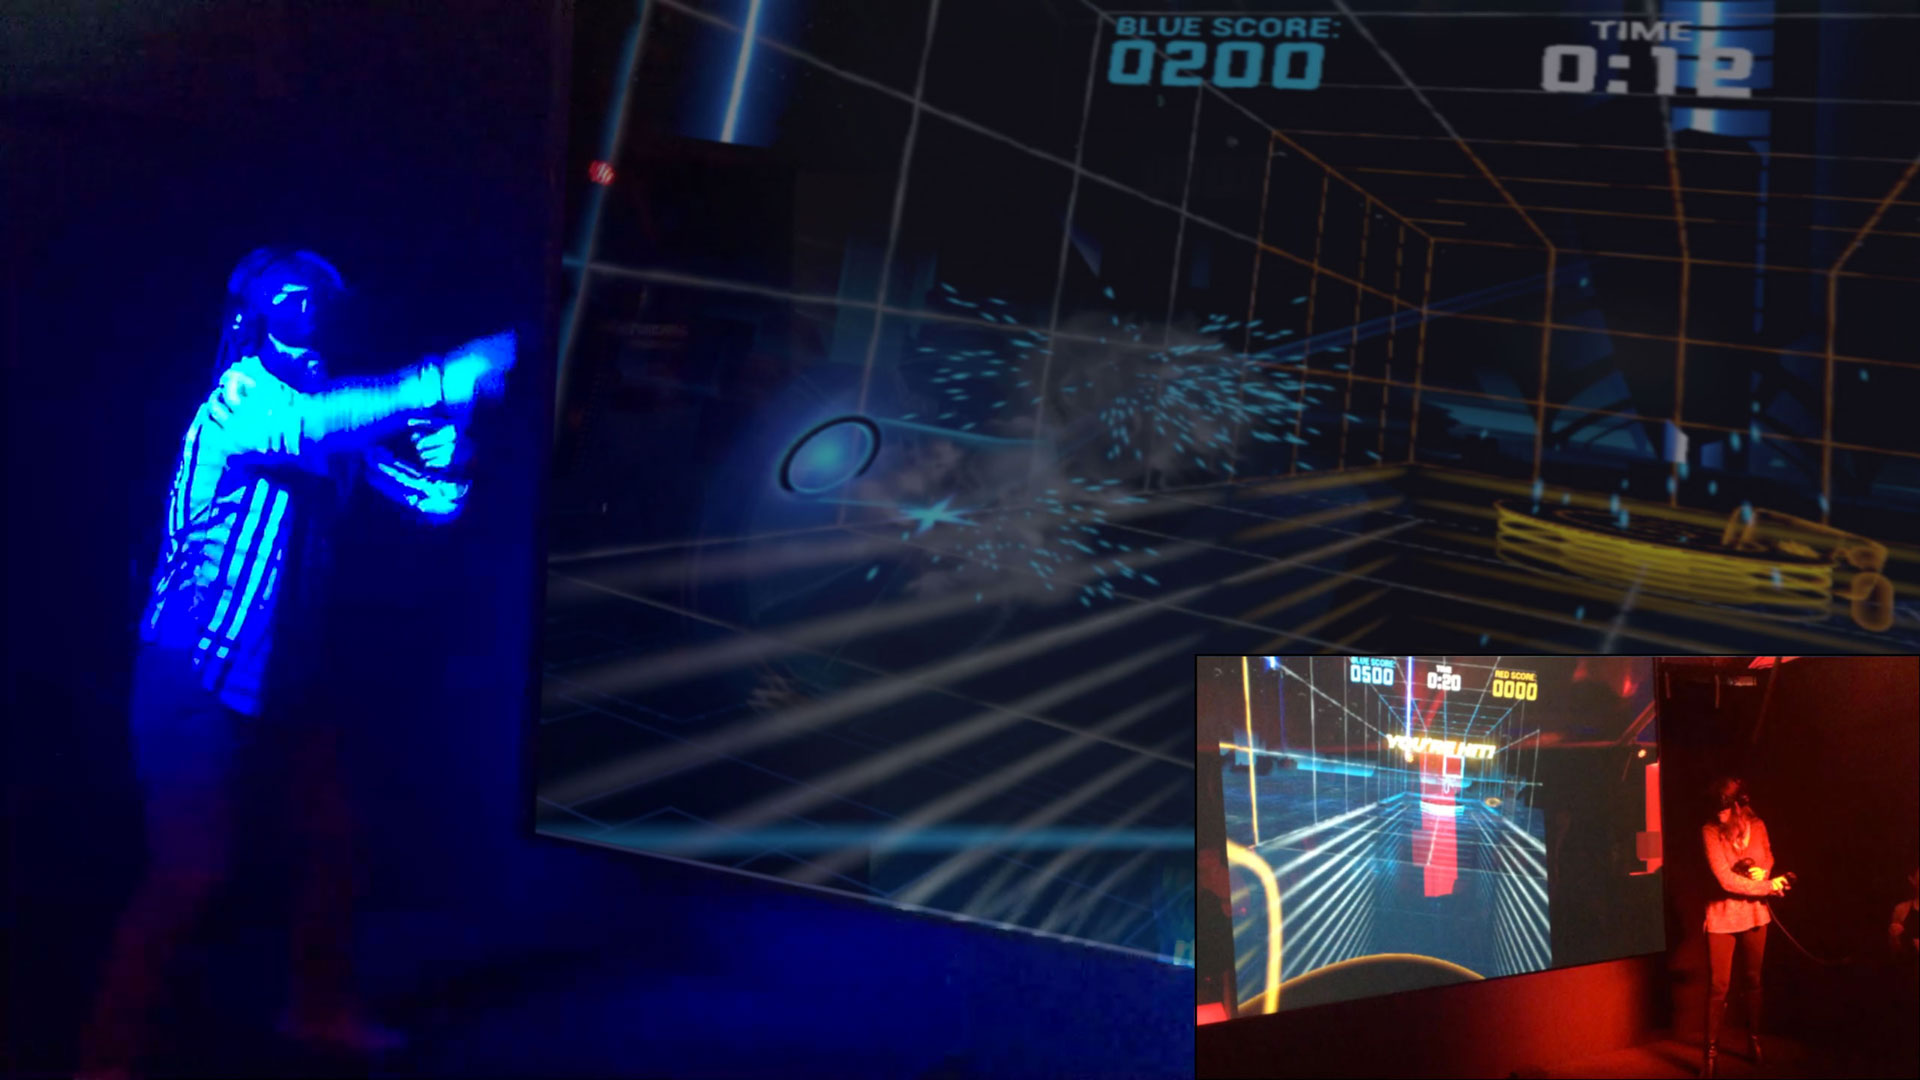 Groove Jones Multiplayer VR Game Platform "LightStrike" at CES